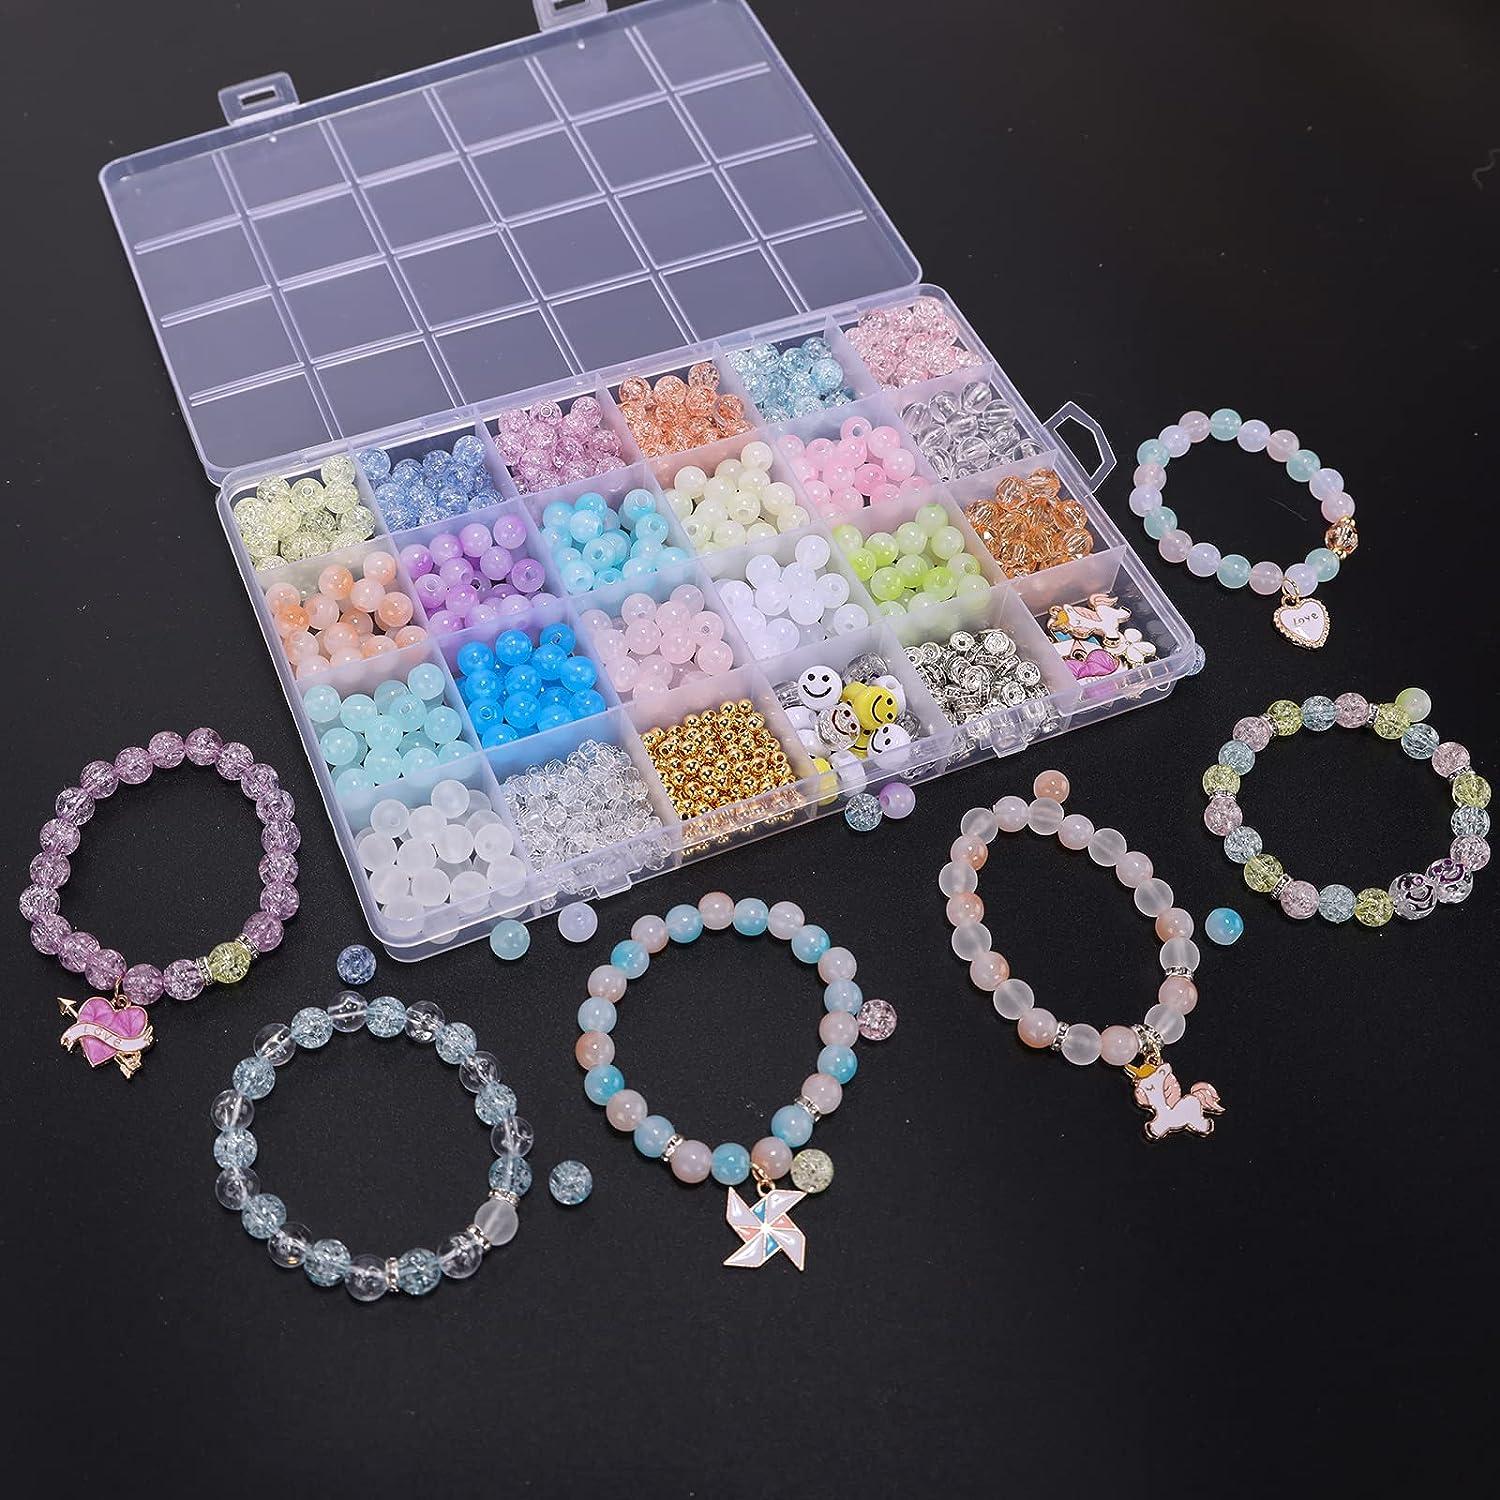 Wholesale Charm Bracelet Making Kit Jewelry Making Supplies Gift